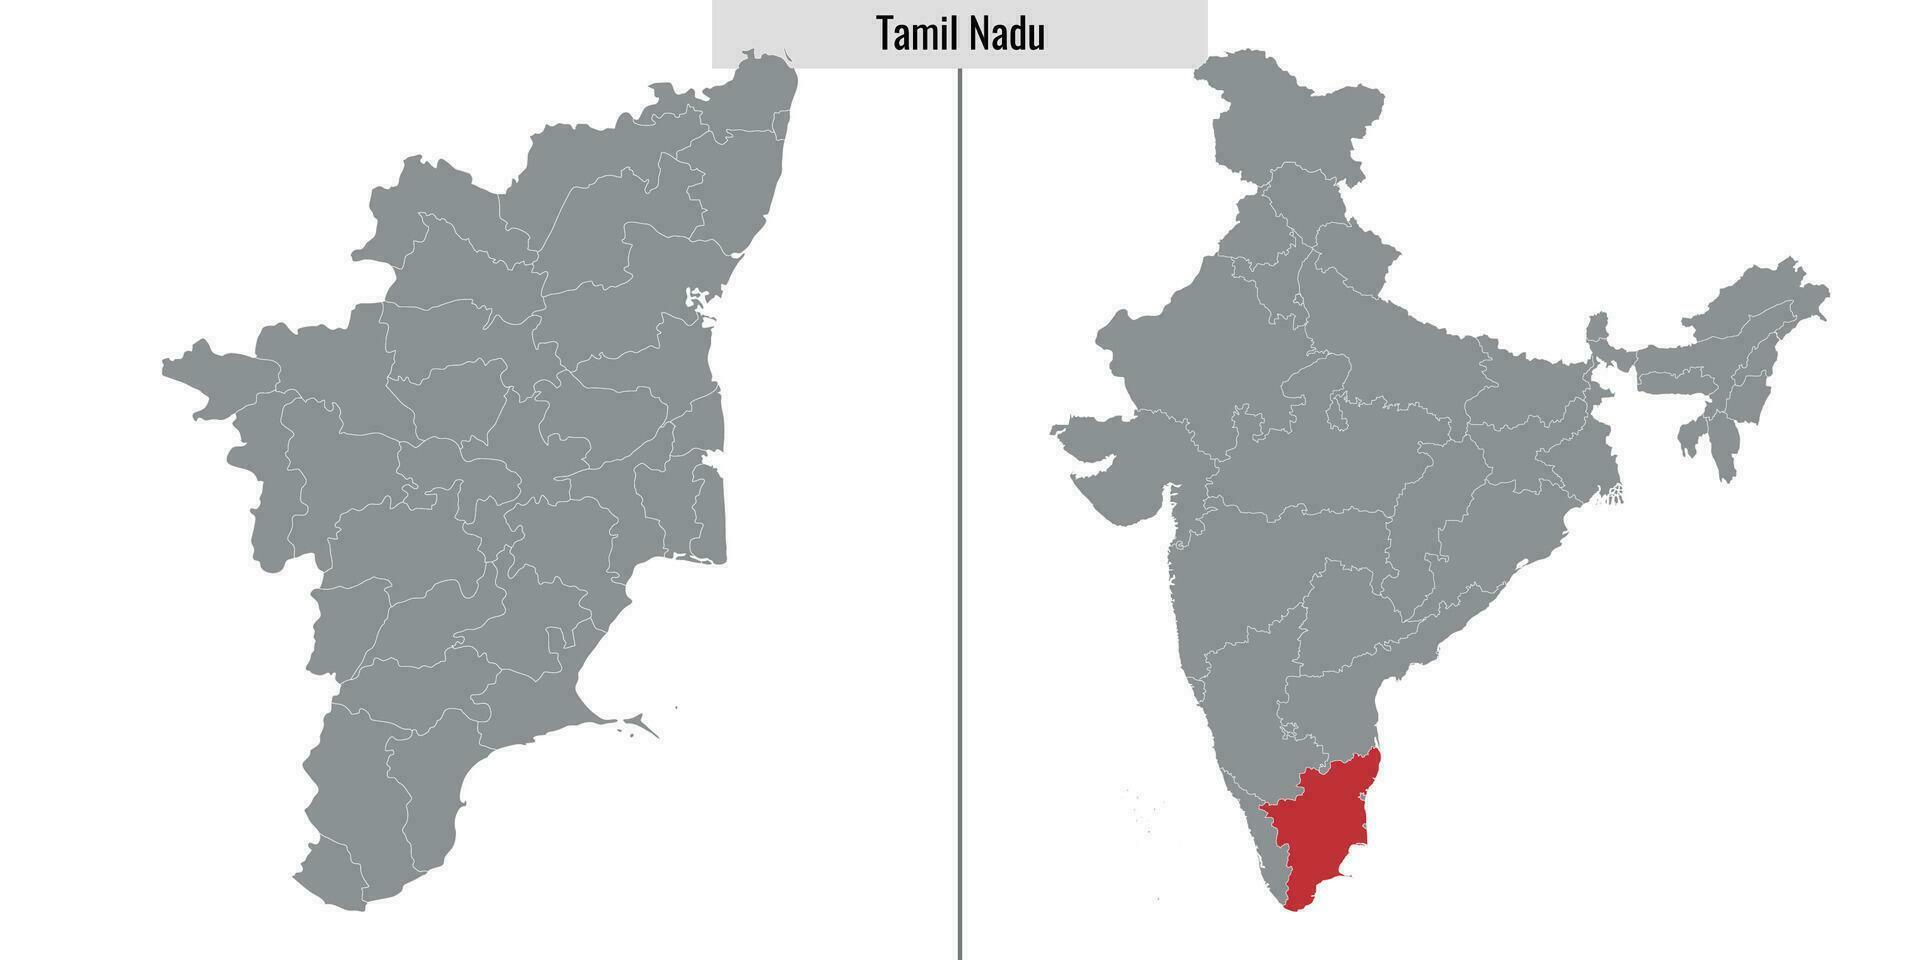 mapa Estado do Índia vetor